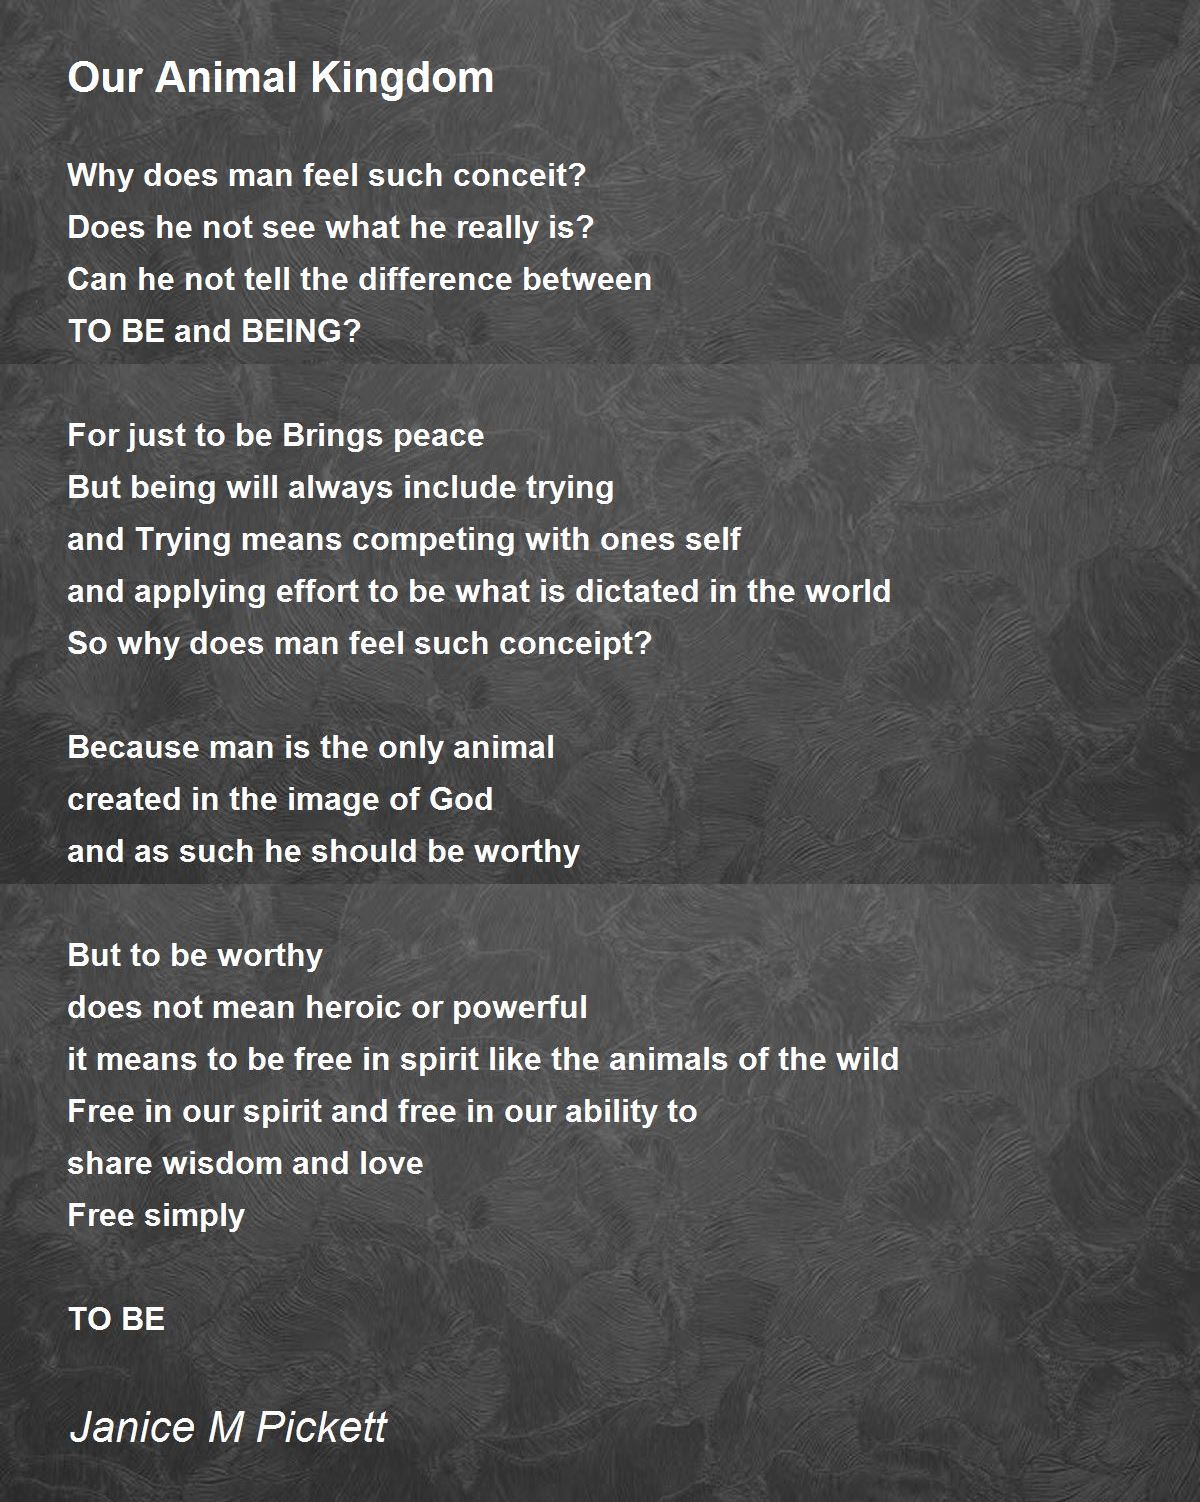 Our Animal Kingdom - Our Animal Kingdom Poem by Janice M Pickett